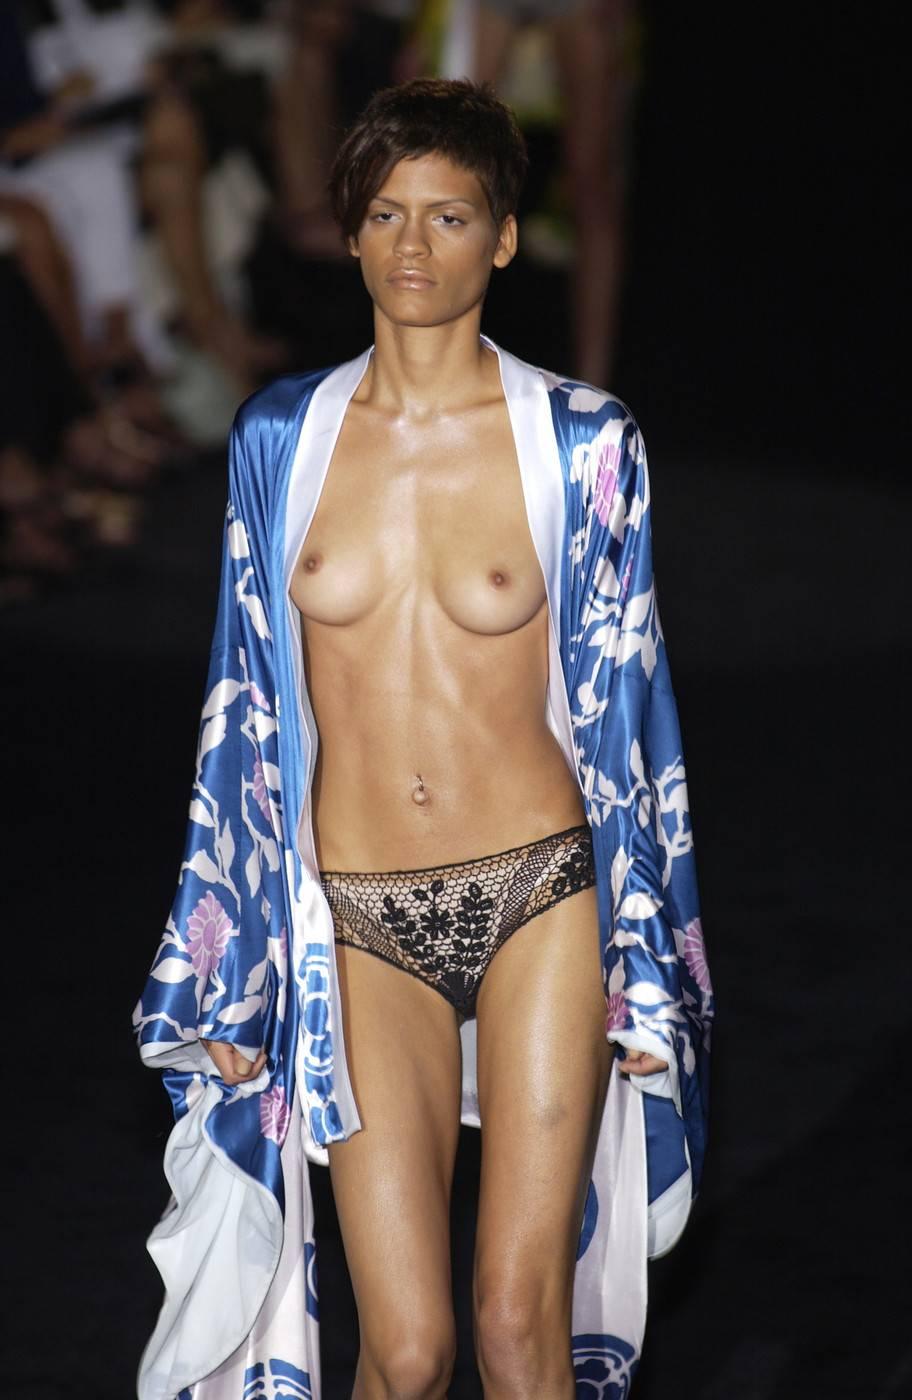 Women's or Men's Tom Ford for Gucci Spring/Summer 2003 Menswear Blue Silk Kimono